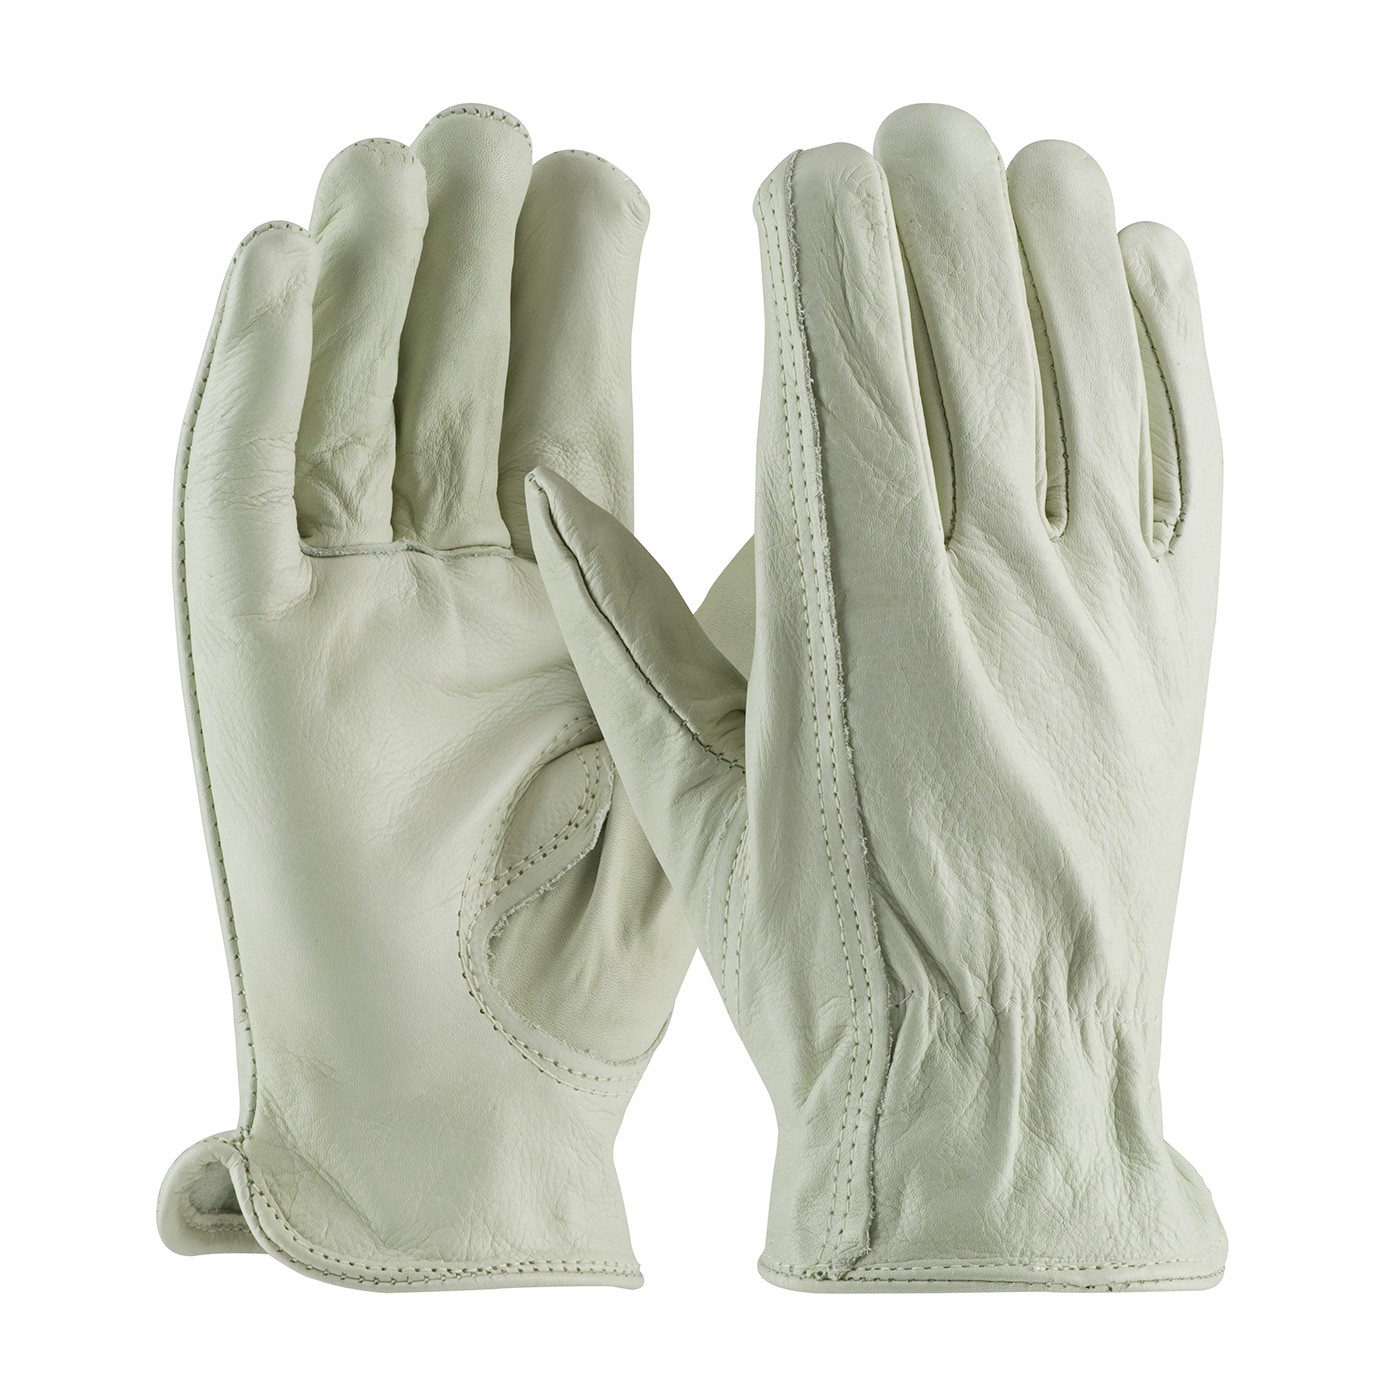 PIP® Premium Grade Top Grain Cowhide Leather Drivers Glove - Keystone Thumb  (#68-168)